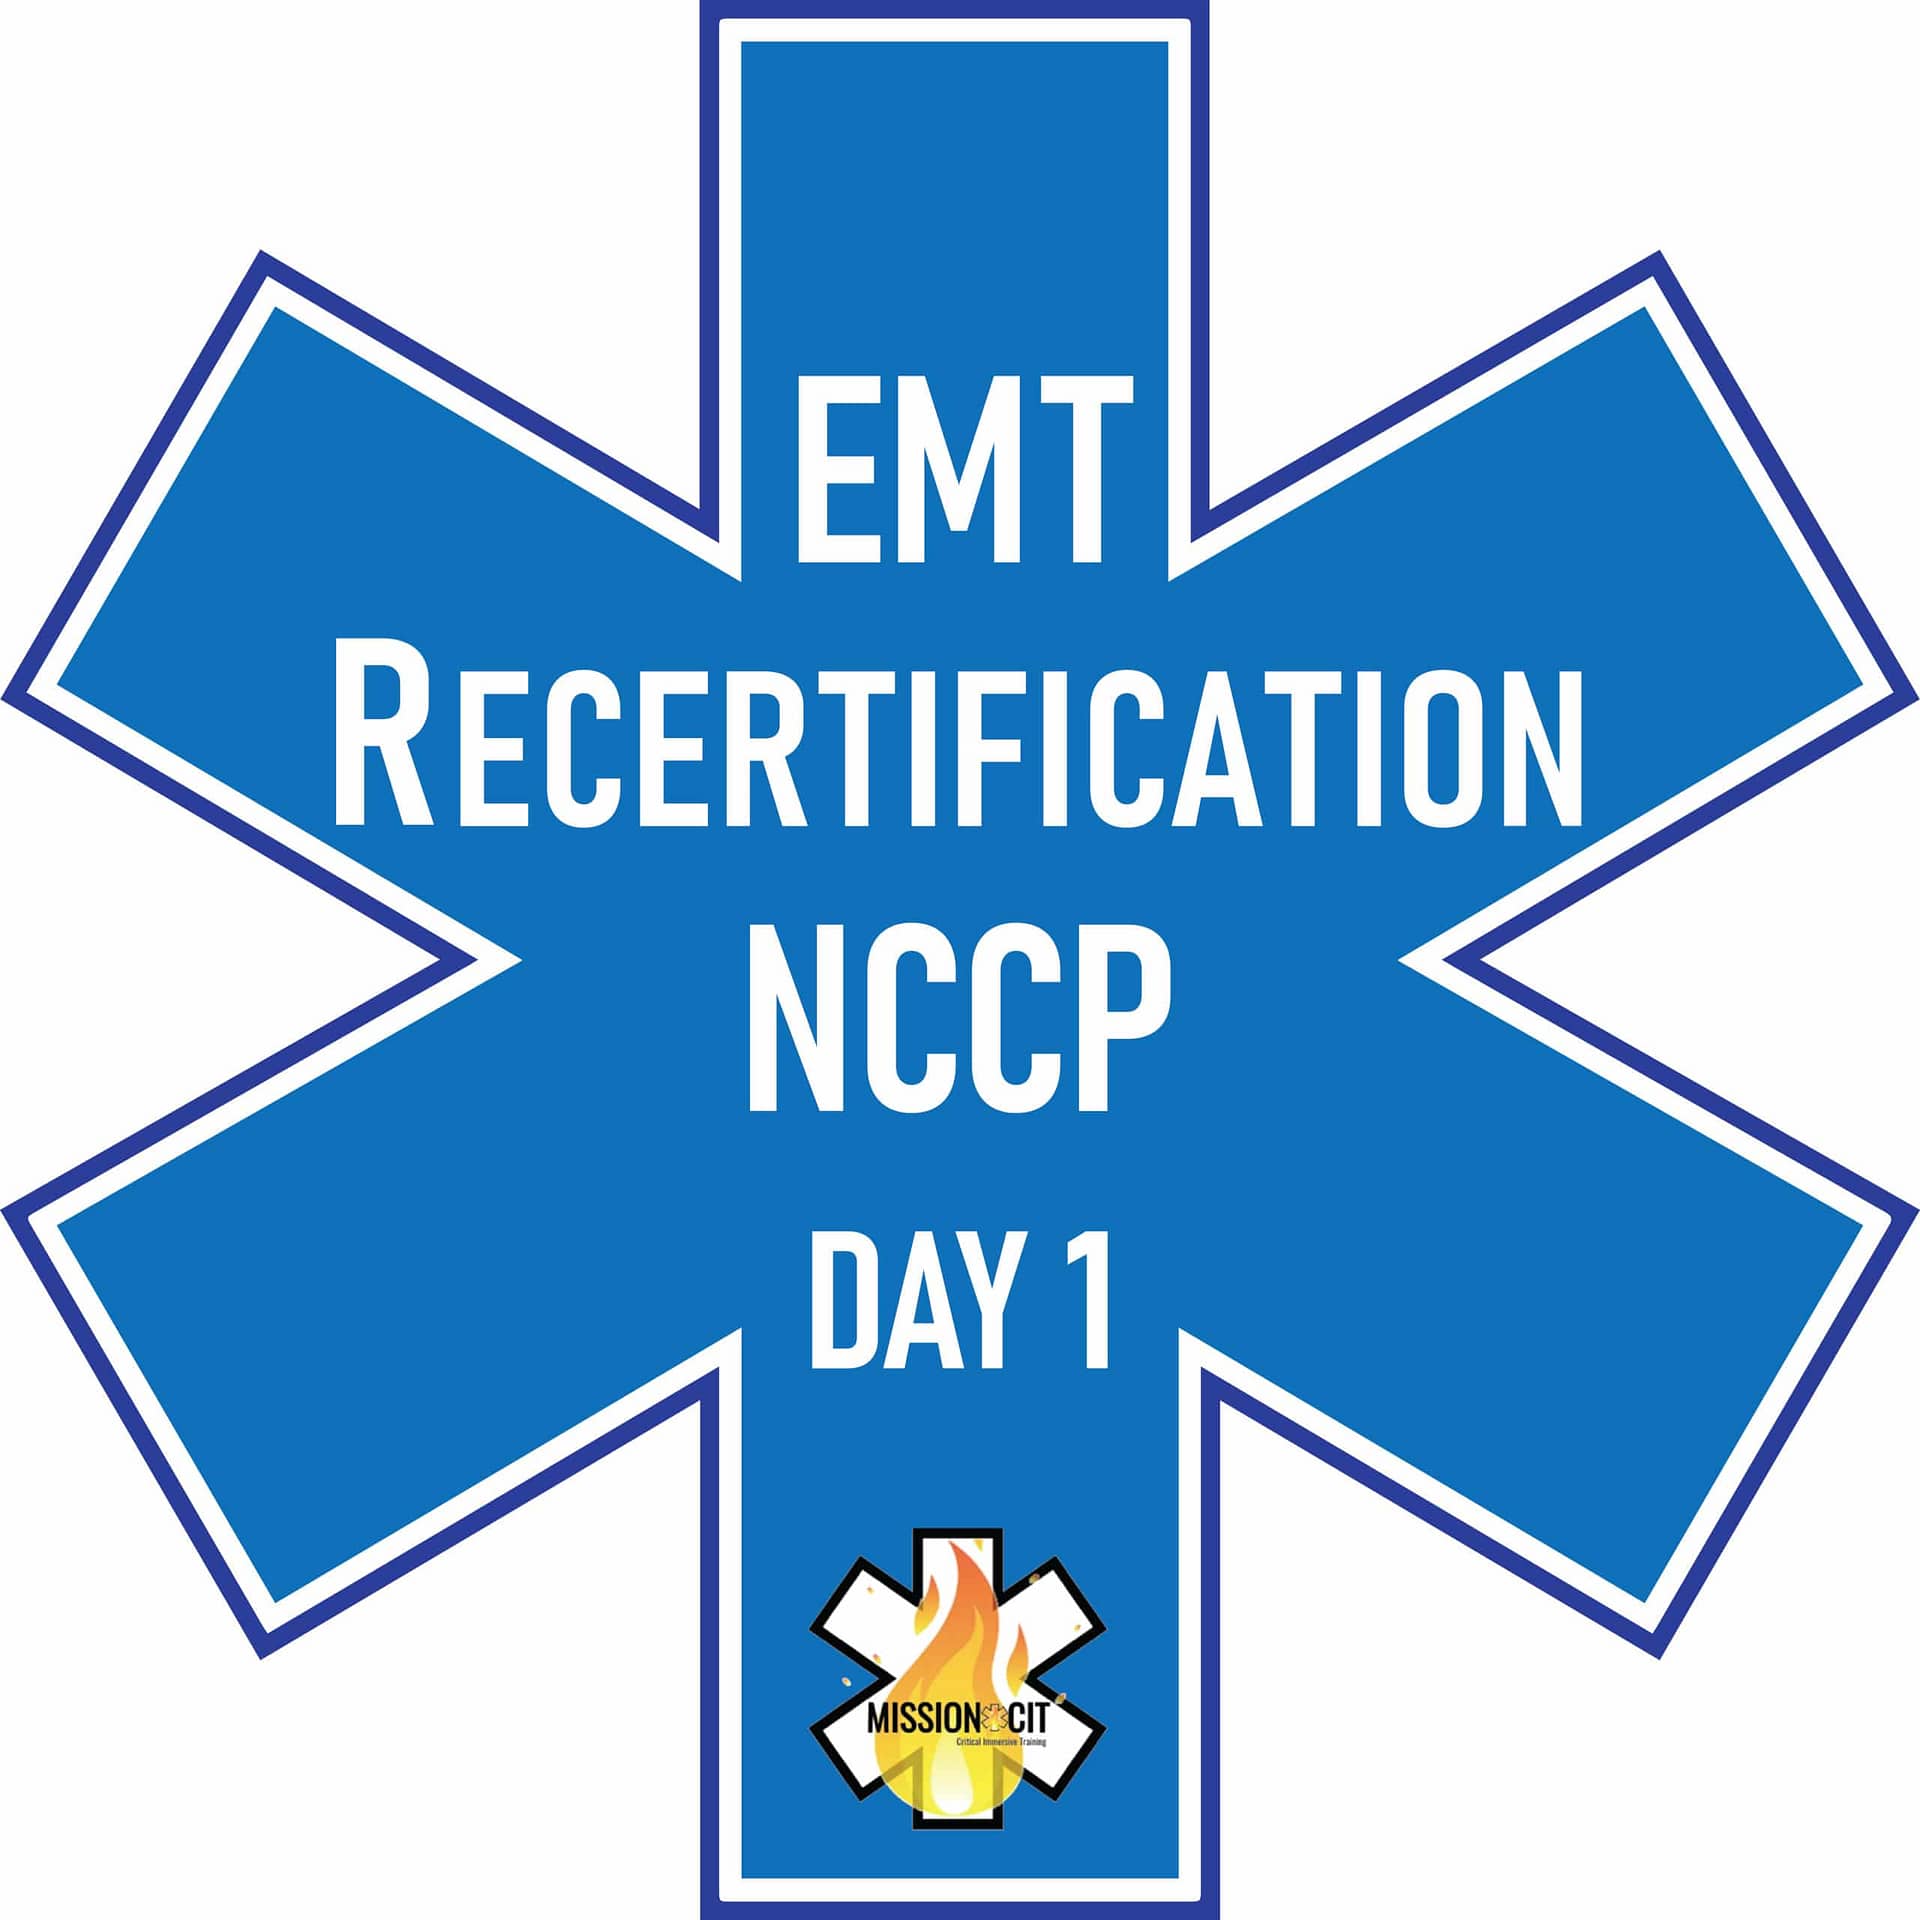 EMT NCCP | Day 1 Recertification